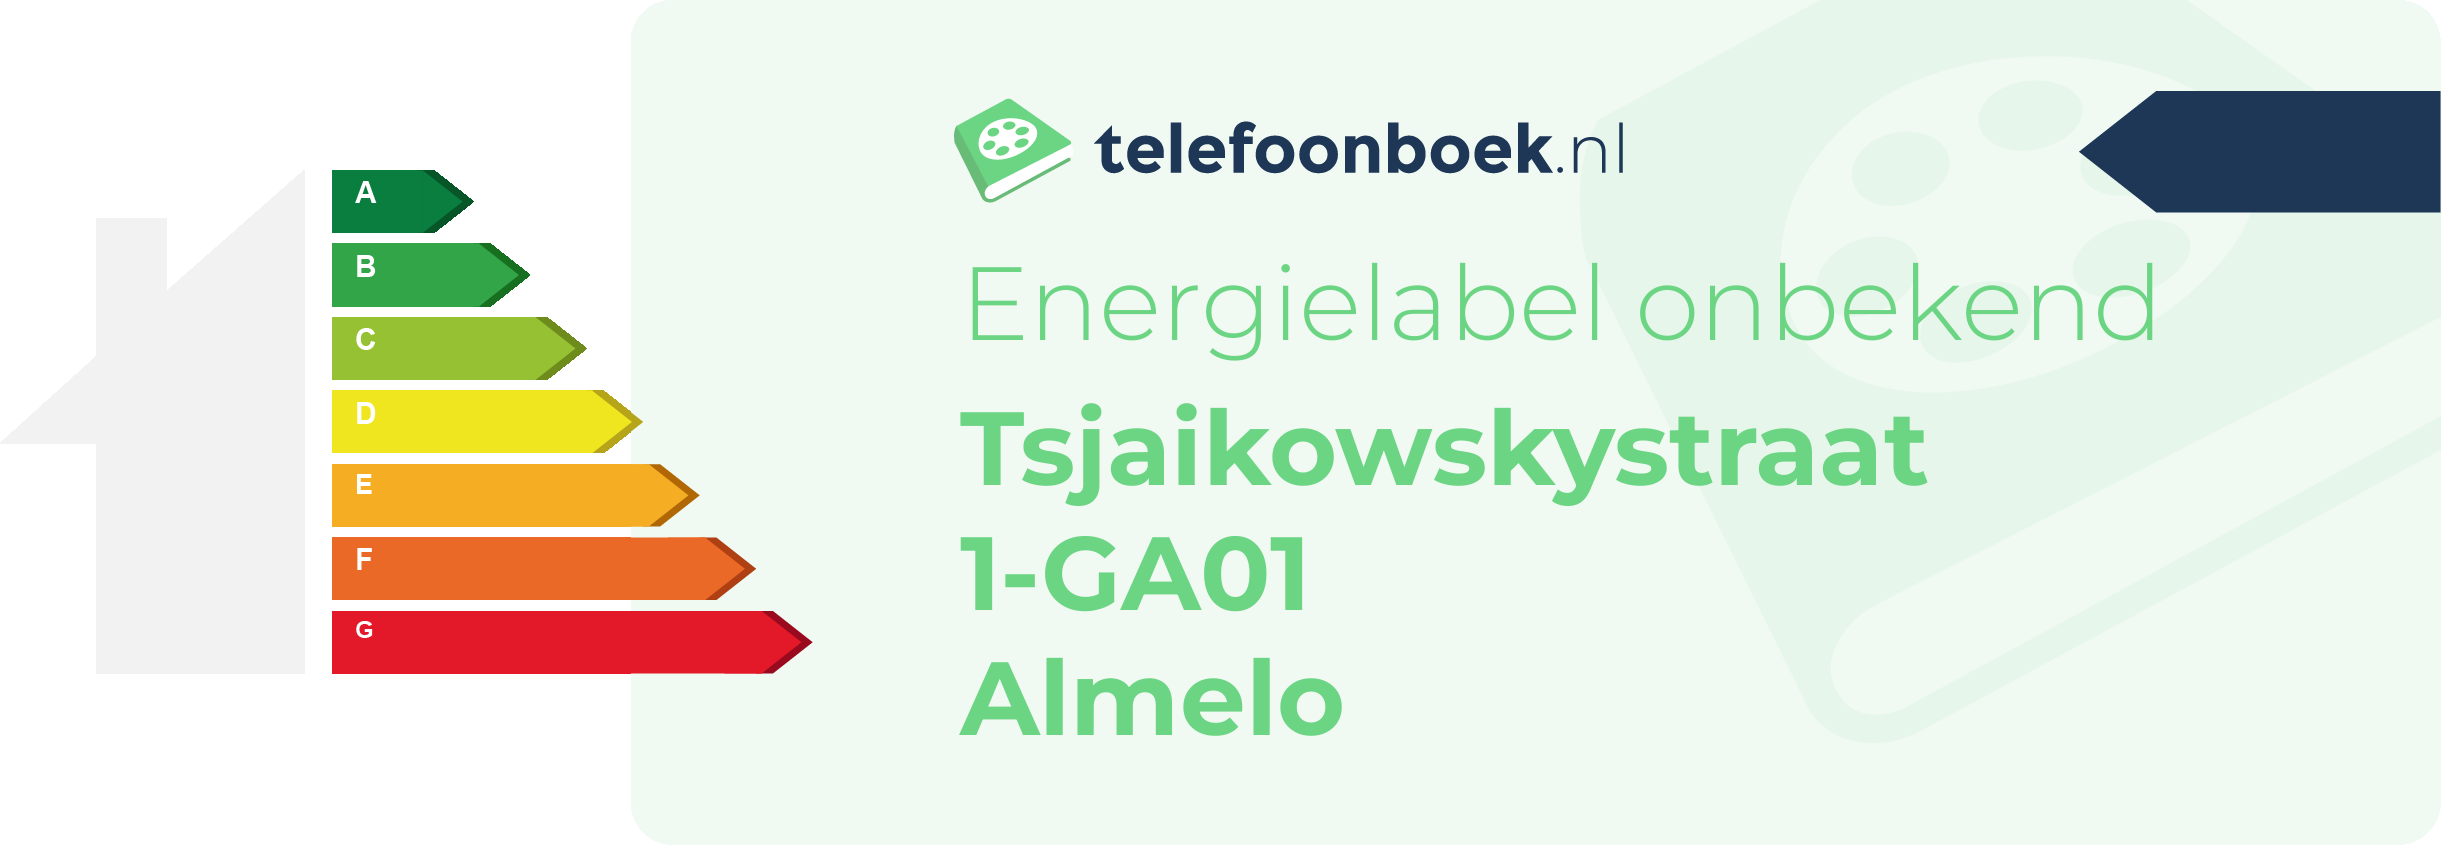 Energielabel Tsjaikowskystraat 1-GA01 Almelo